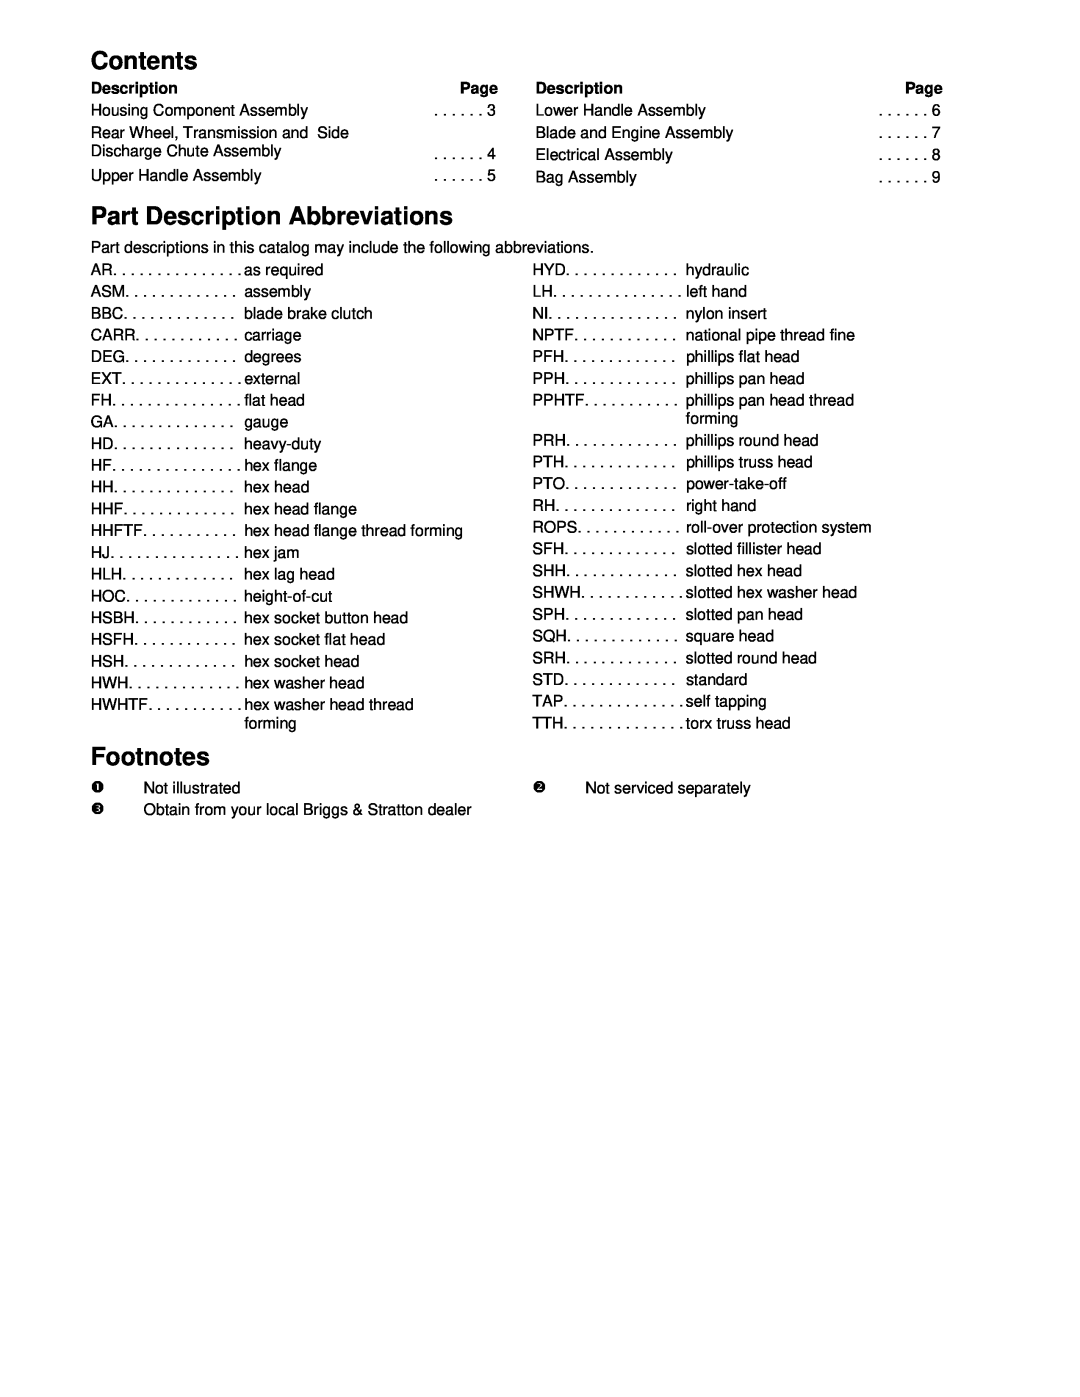 Hayter Mowers R53A manual Page, Contents, Part Description Abbreviations, Footnotes 